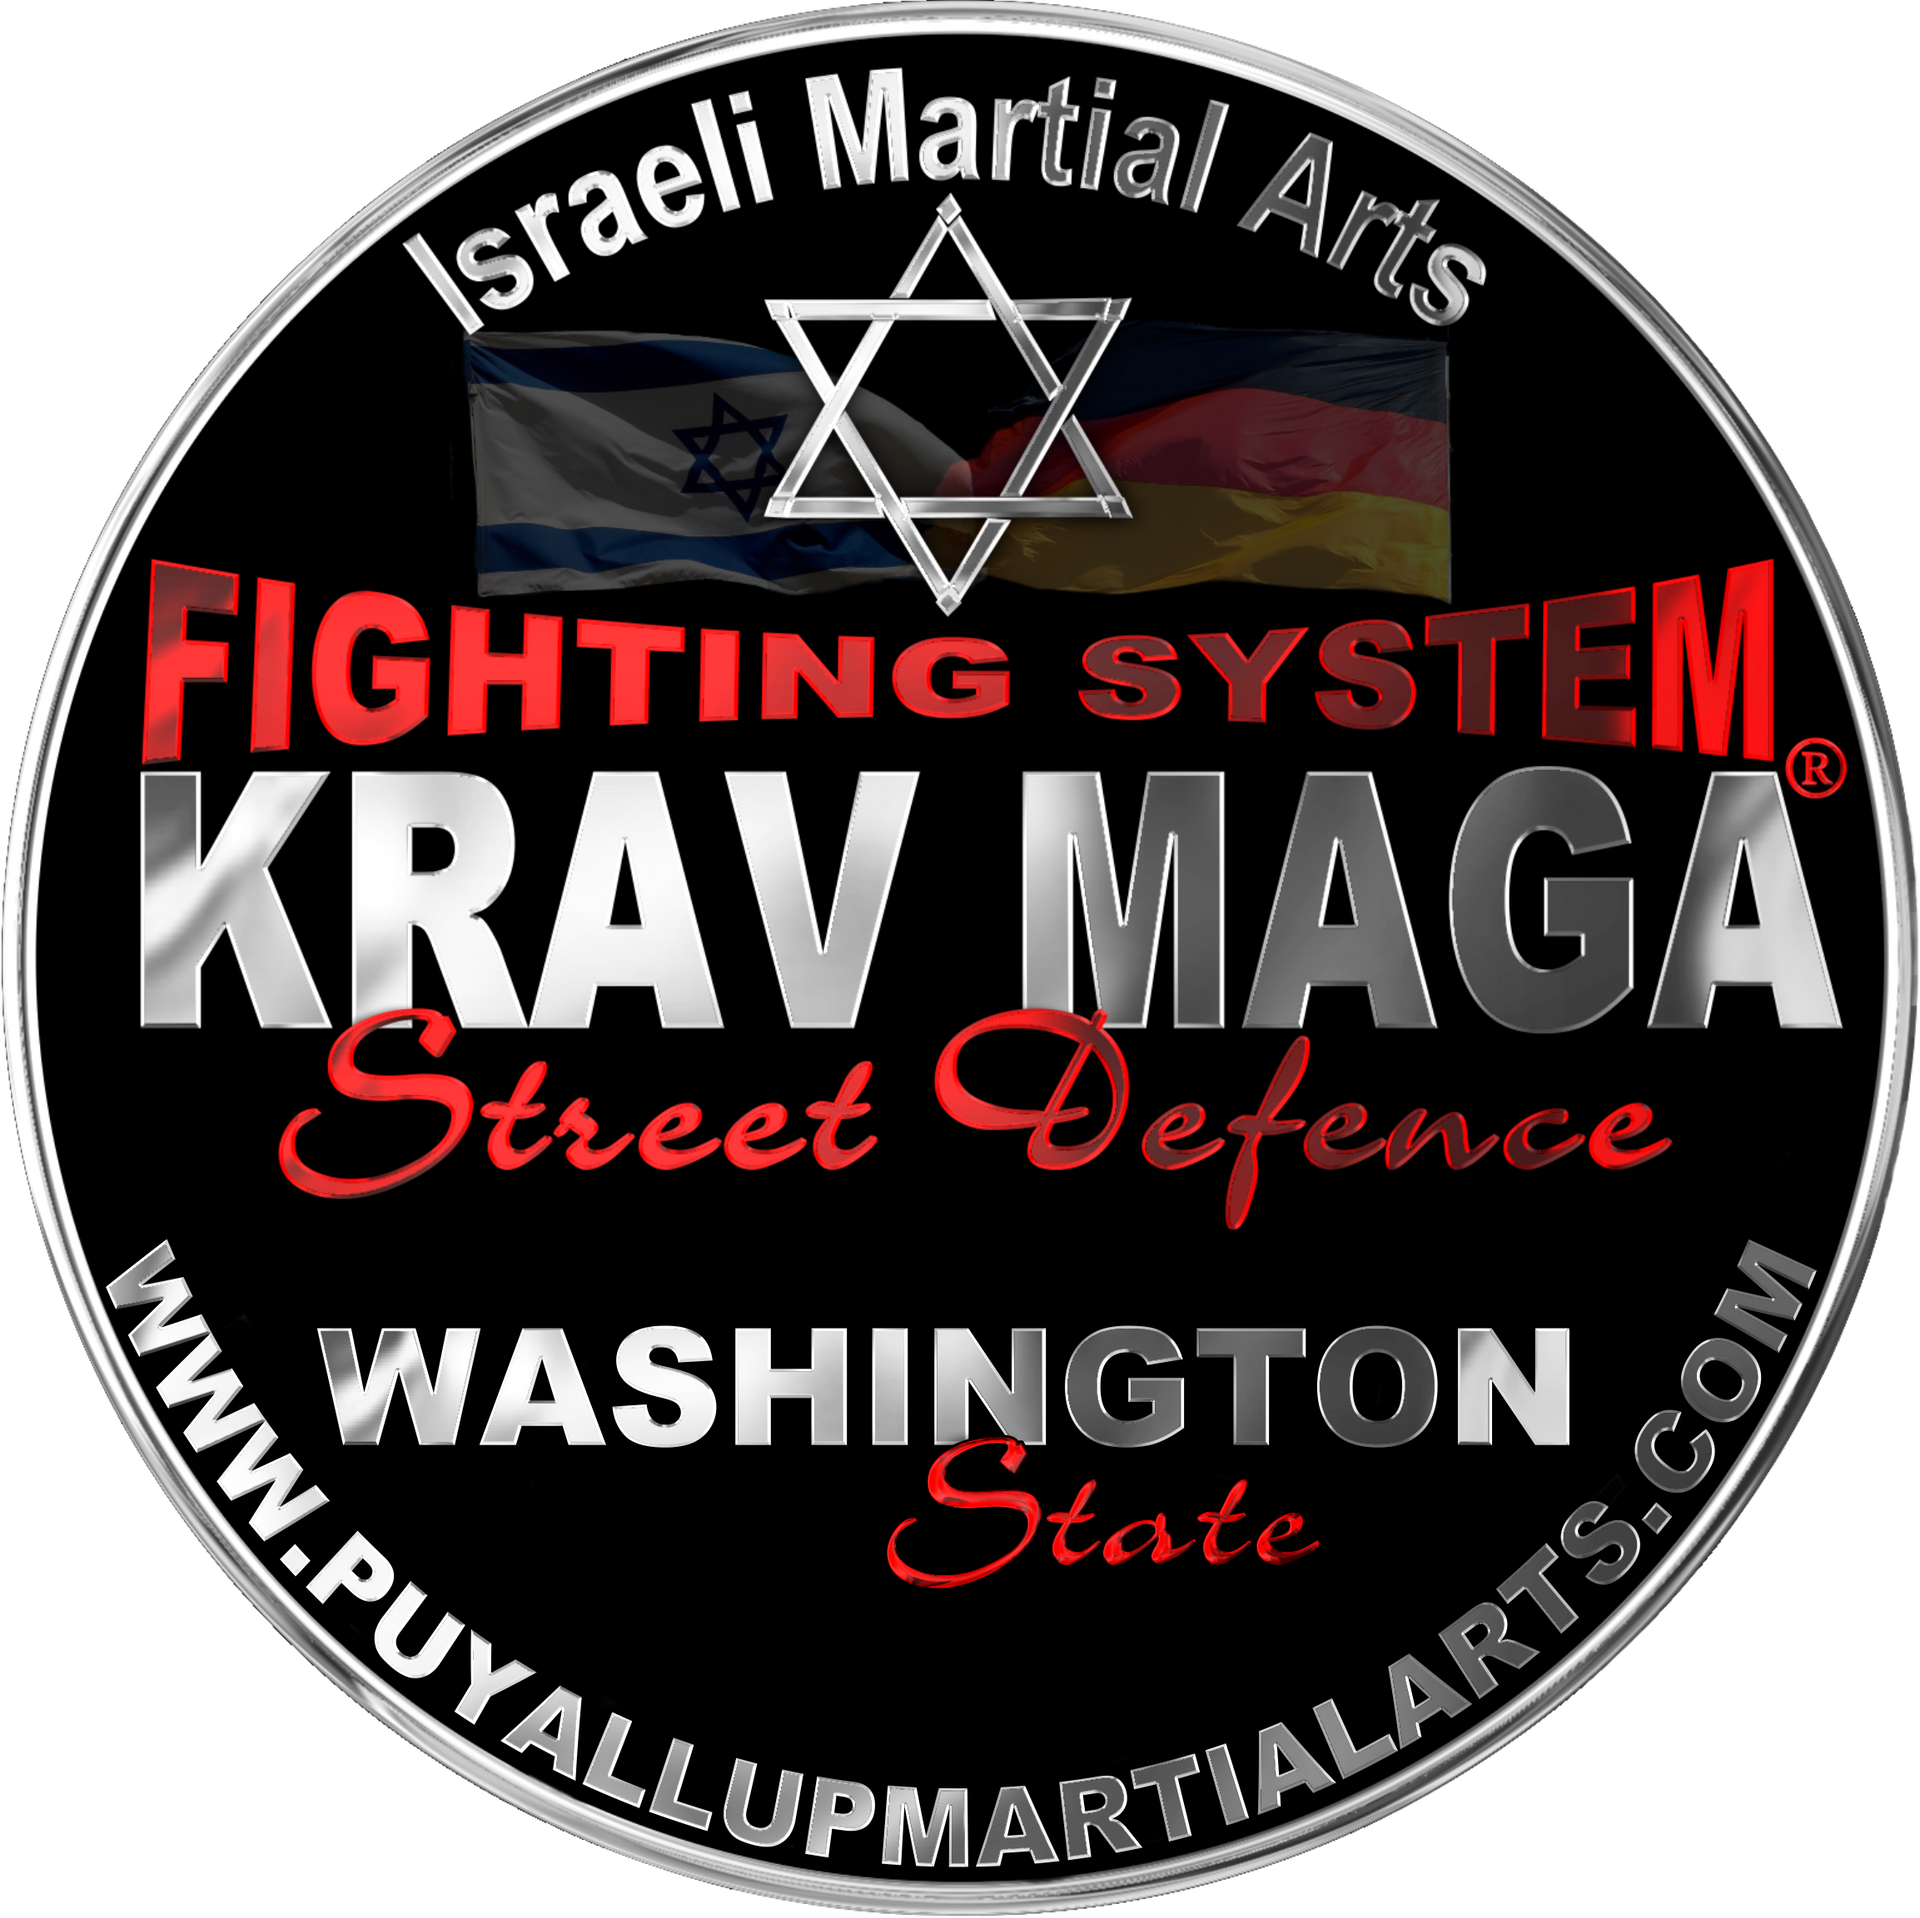 krav maga street defense washington state logo 